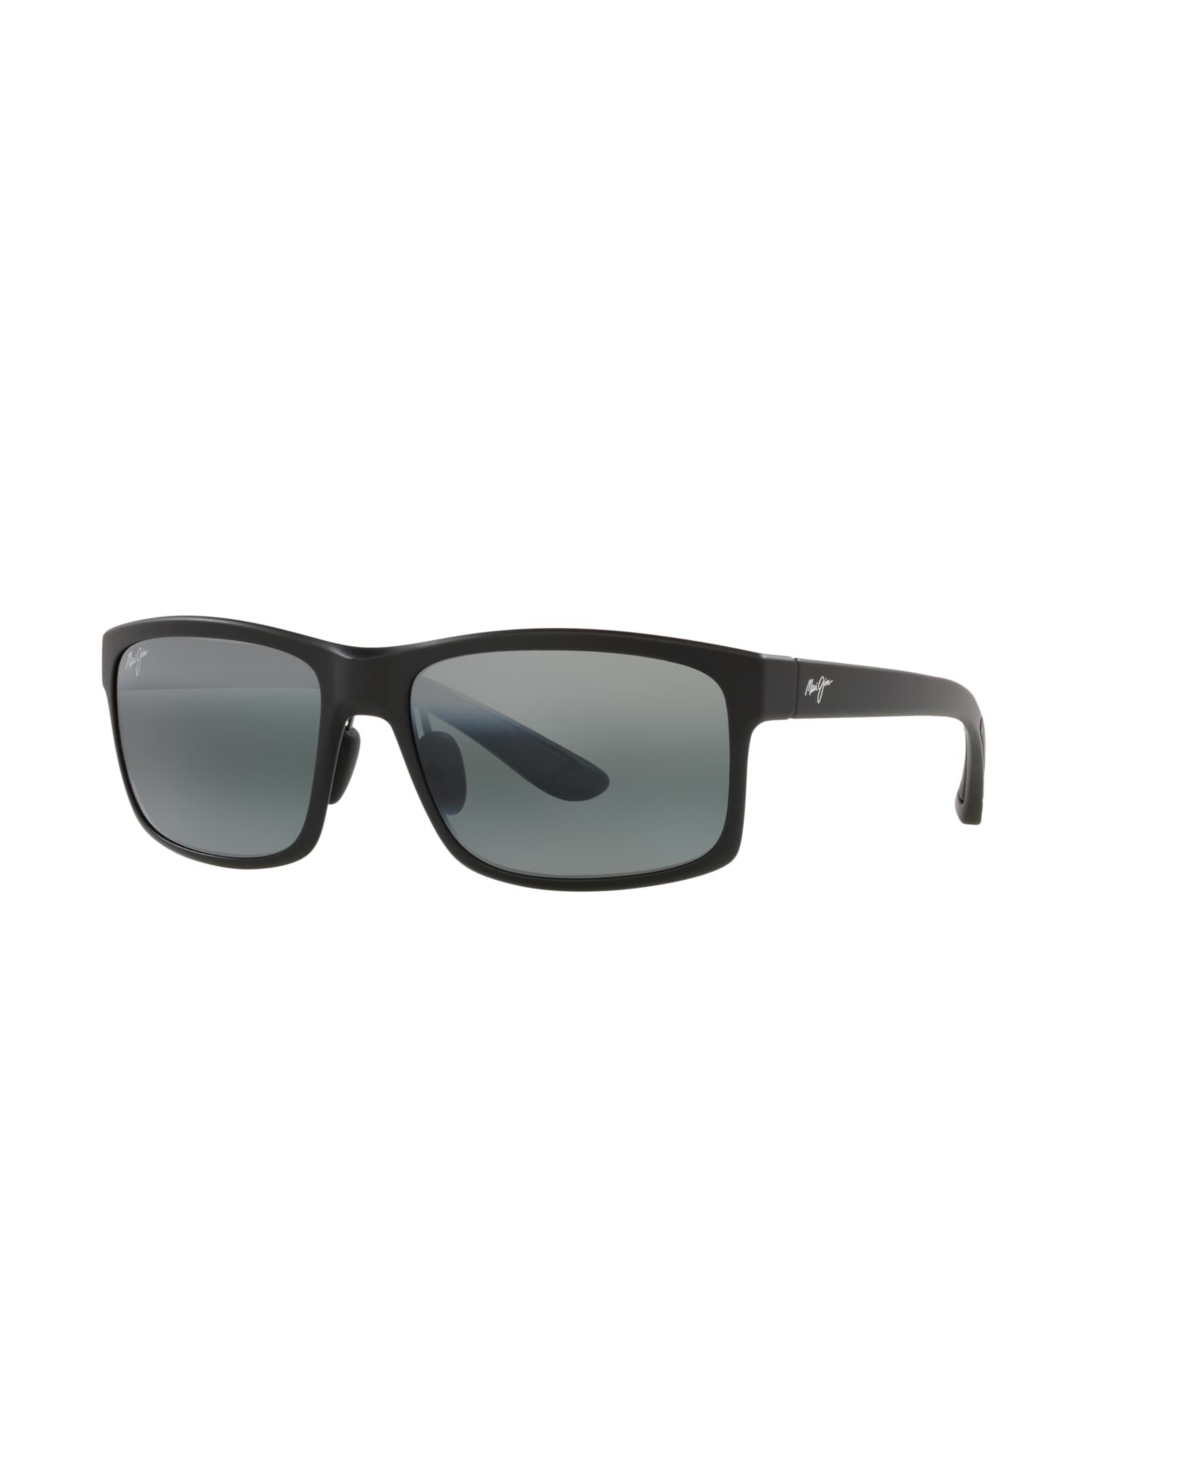 Maui Jim Unisex Polarized Sunglasses, 439 Pokowai Arch In Black Matte